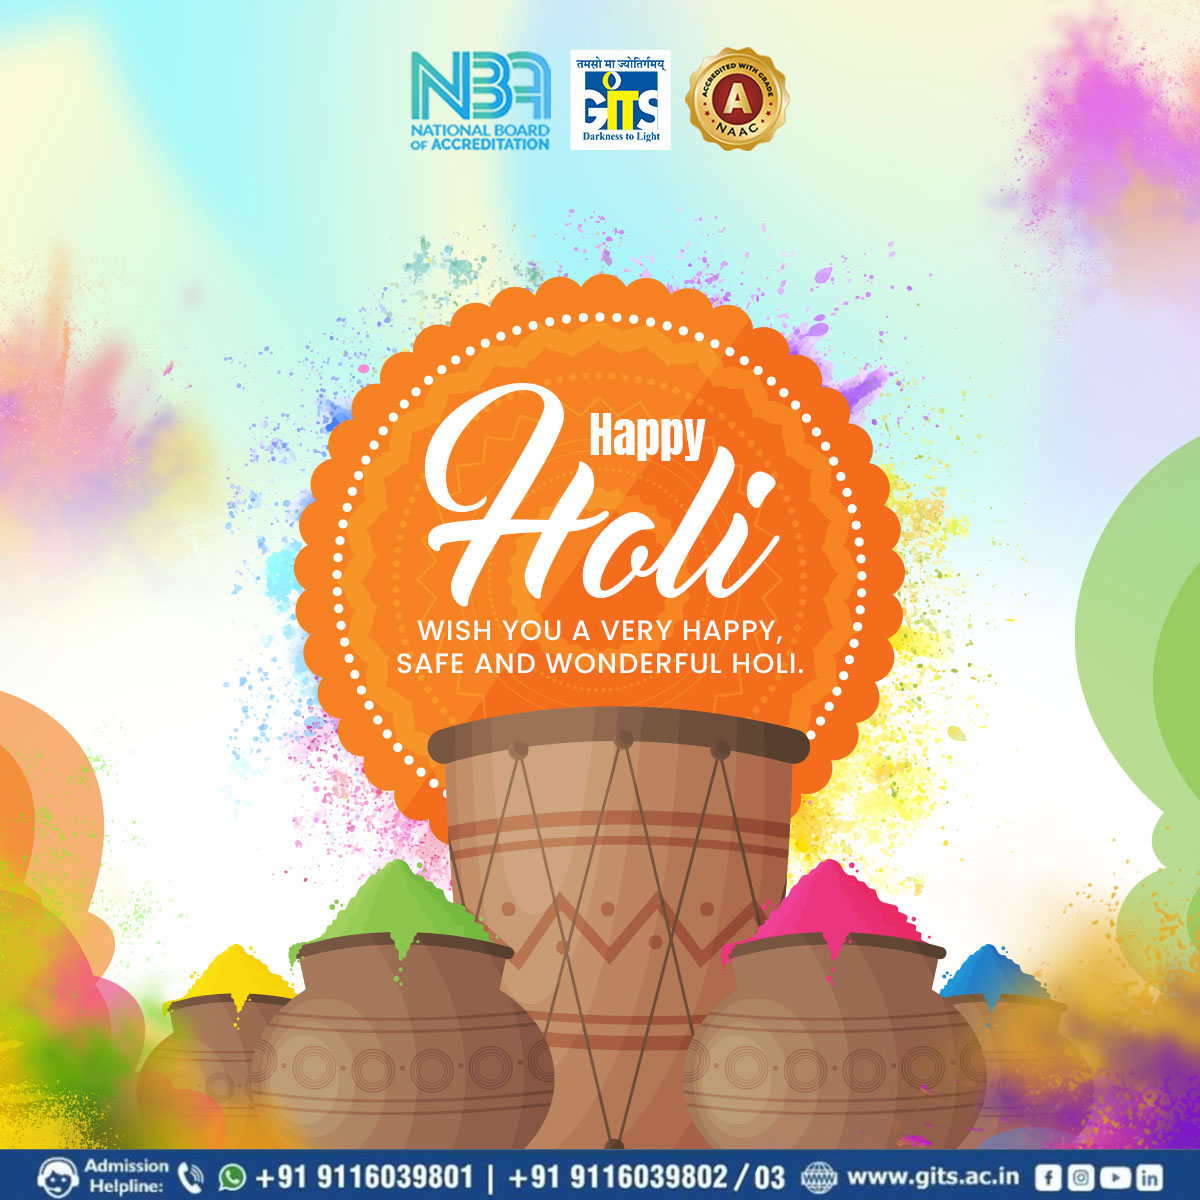 We wish you a safe and Happy Holi this year! 

#happyholi #holi2023  #admission #enginnering #rajasthancollege #engineeringinstitute #gits #gitsudr